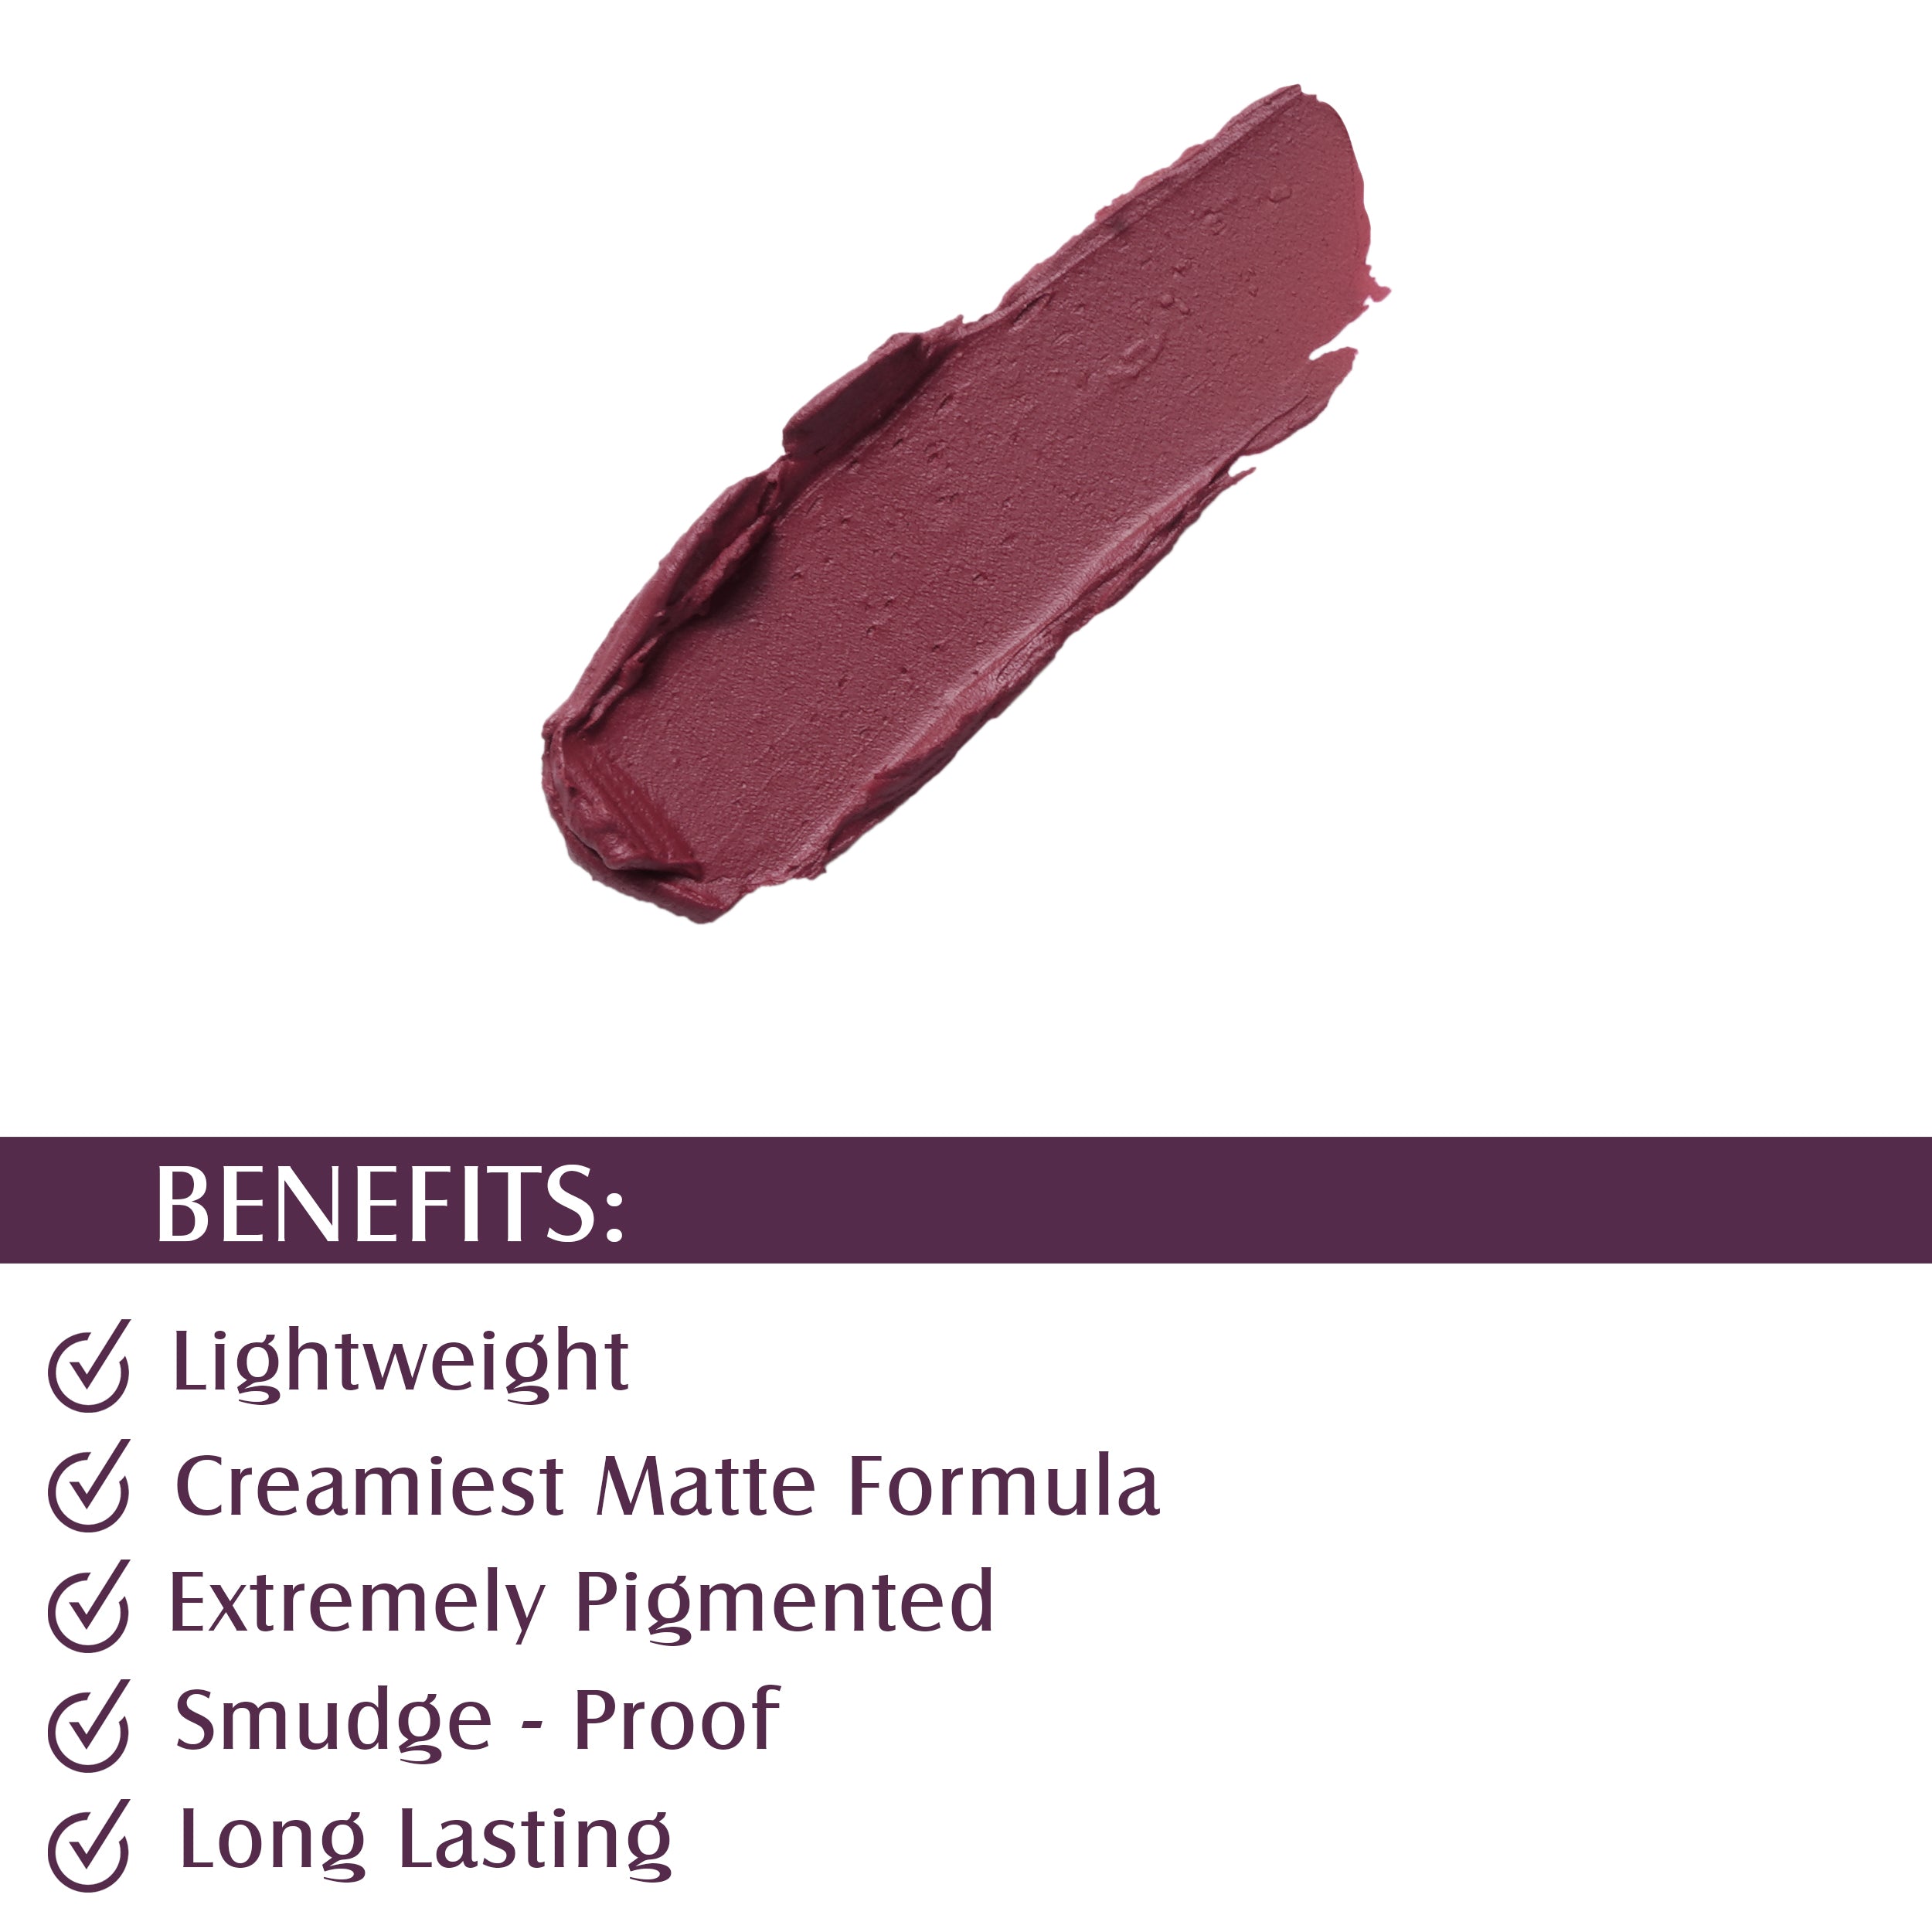 Glam21 Lip Seduction Non-Transfer Crayon Lipstick | Longlasting Creamy Matte Formula (Mauve-13, 2.8 g)